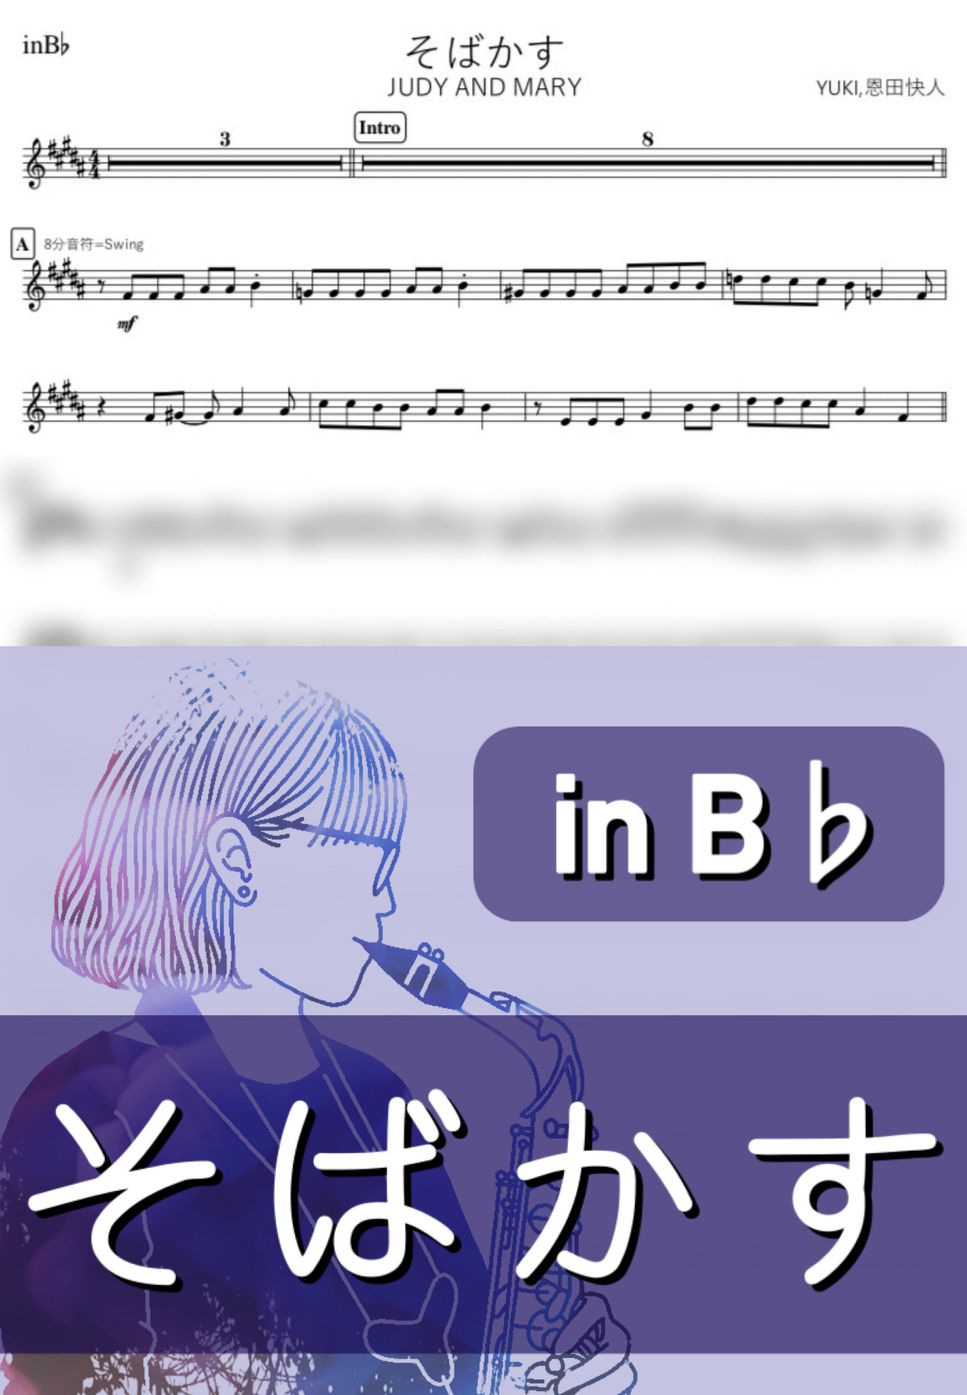 JUDY AND MARY - そばかす (B♭) by kanamusic